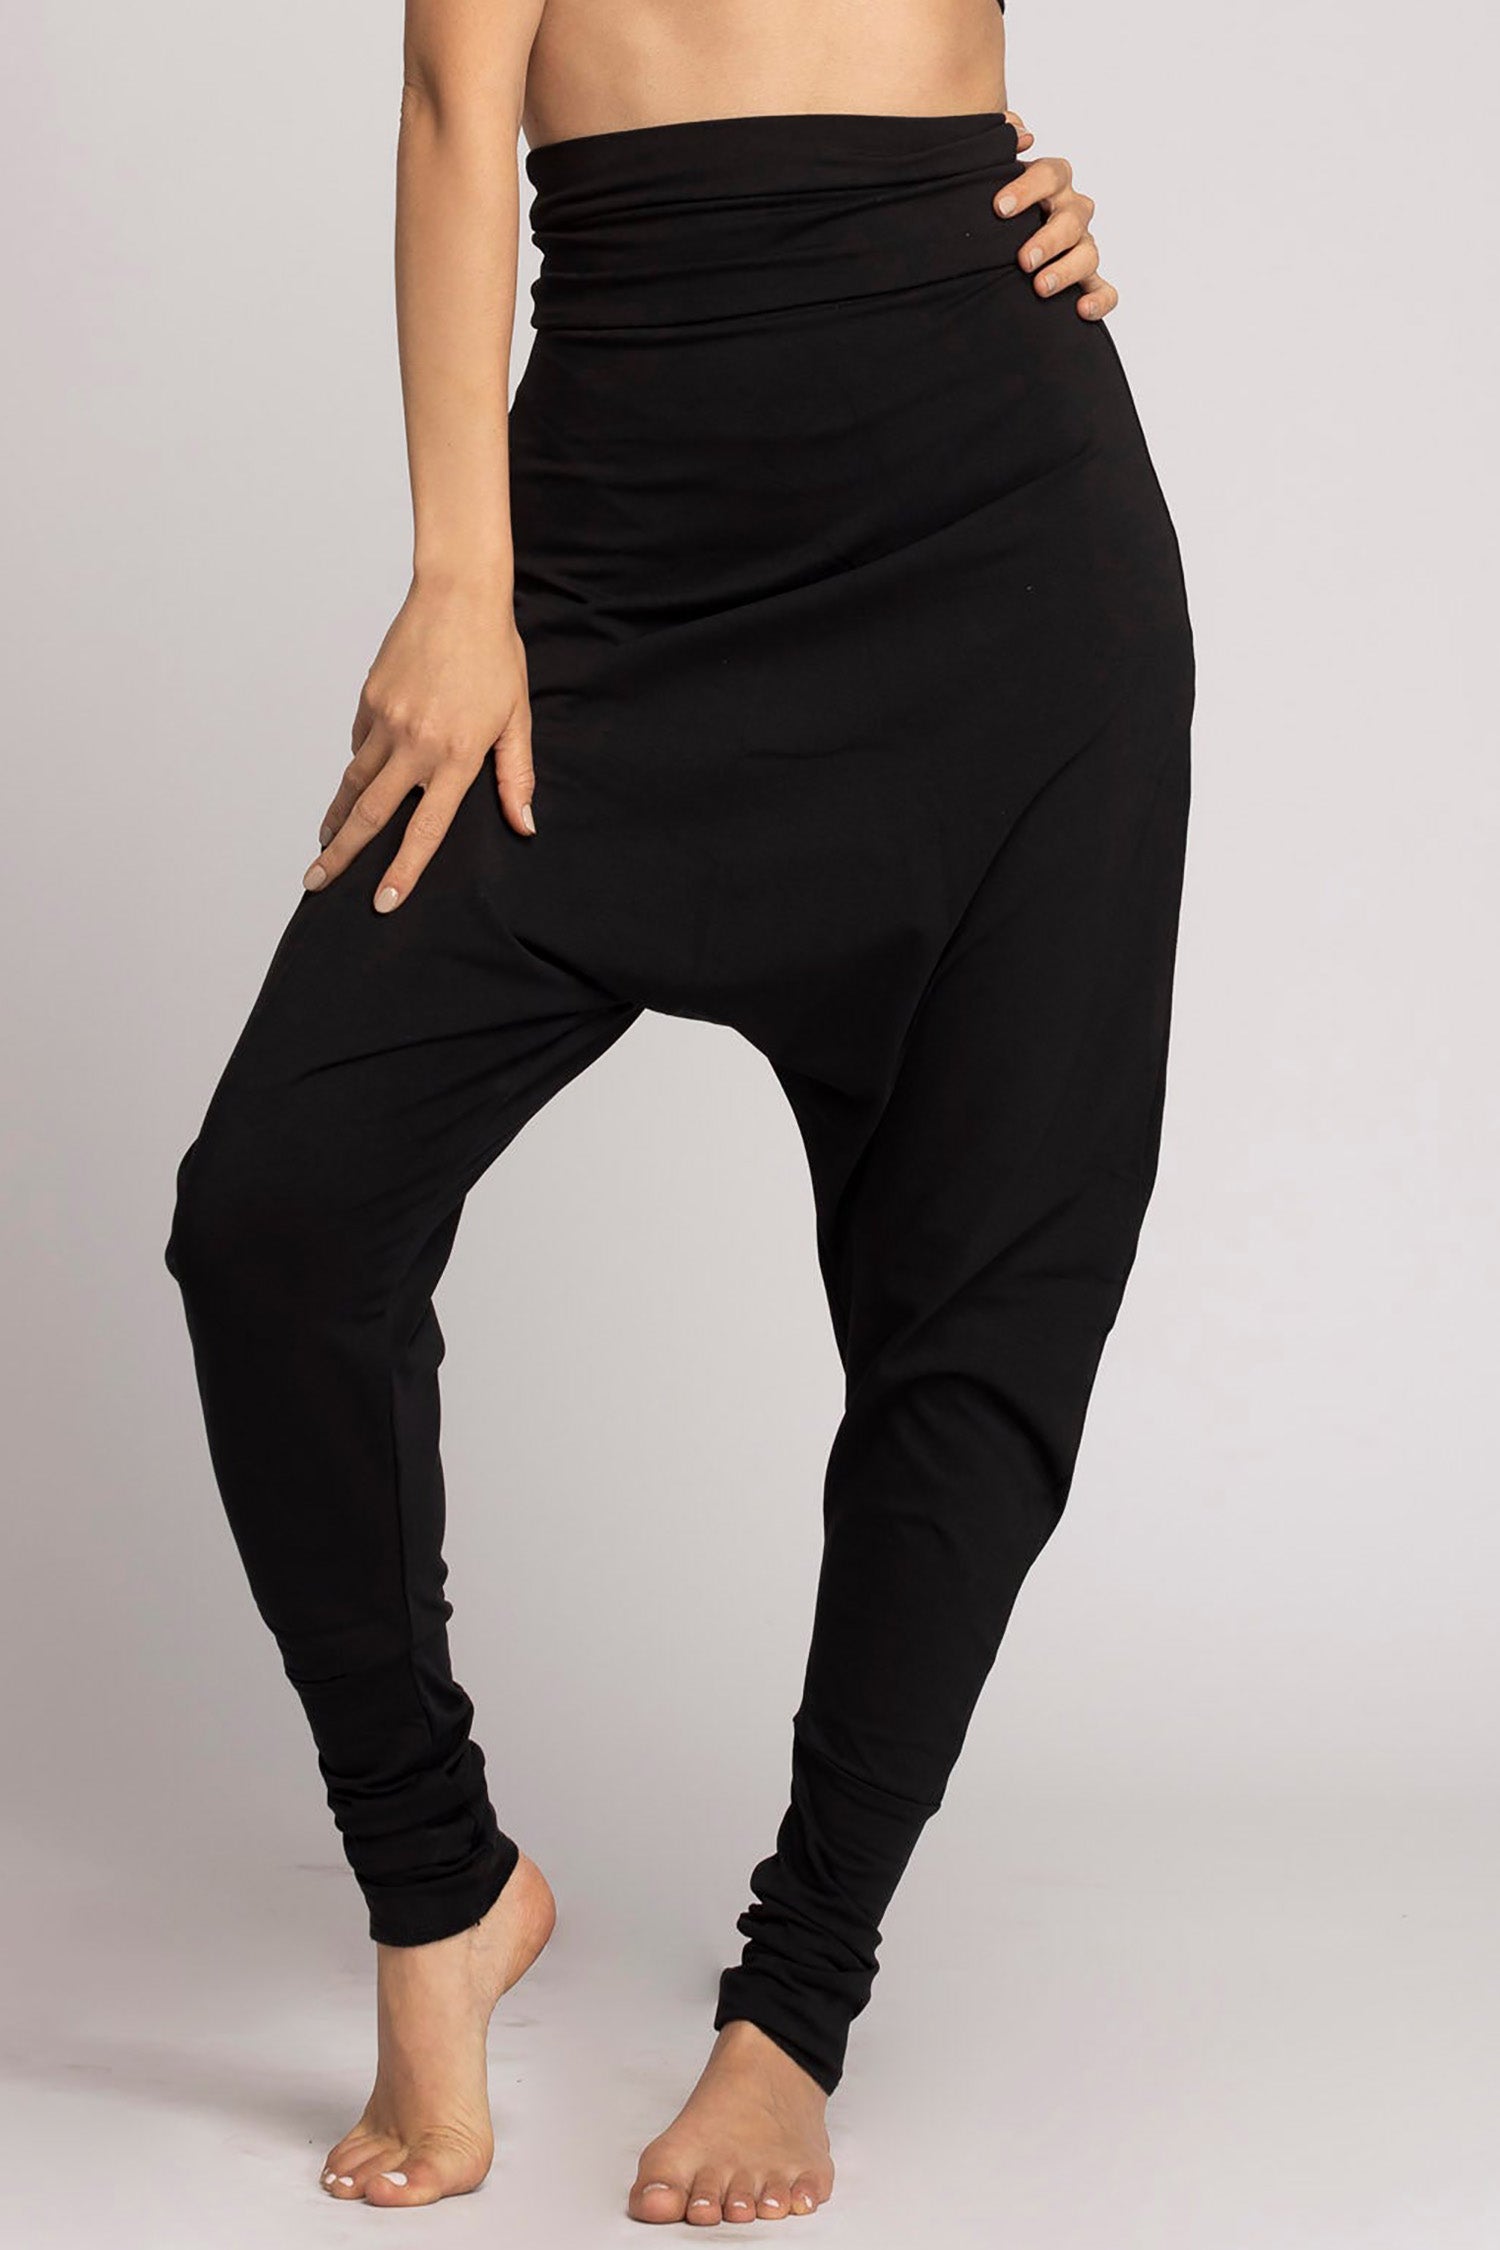 Nnifa Womens Harem Pants | Combo of 2 | Free Size 26-32 Inches (Black &  Beige) : Amazon.in: Fashion